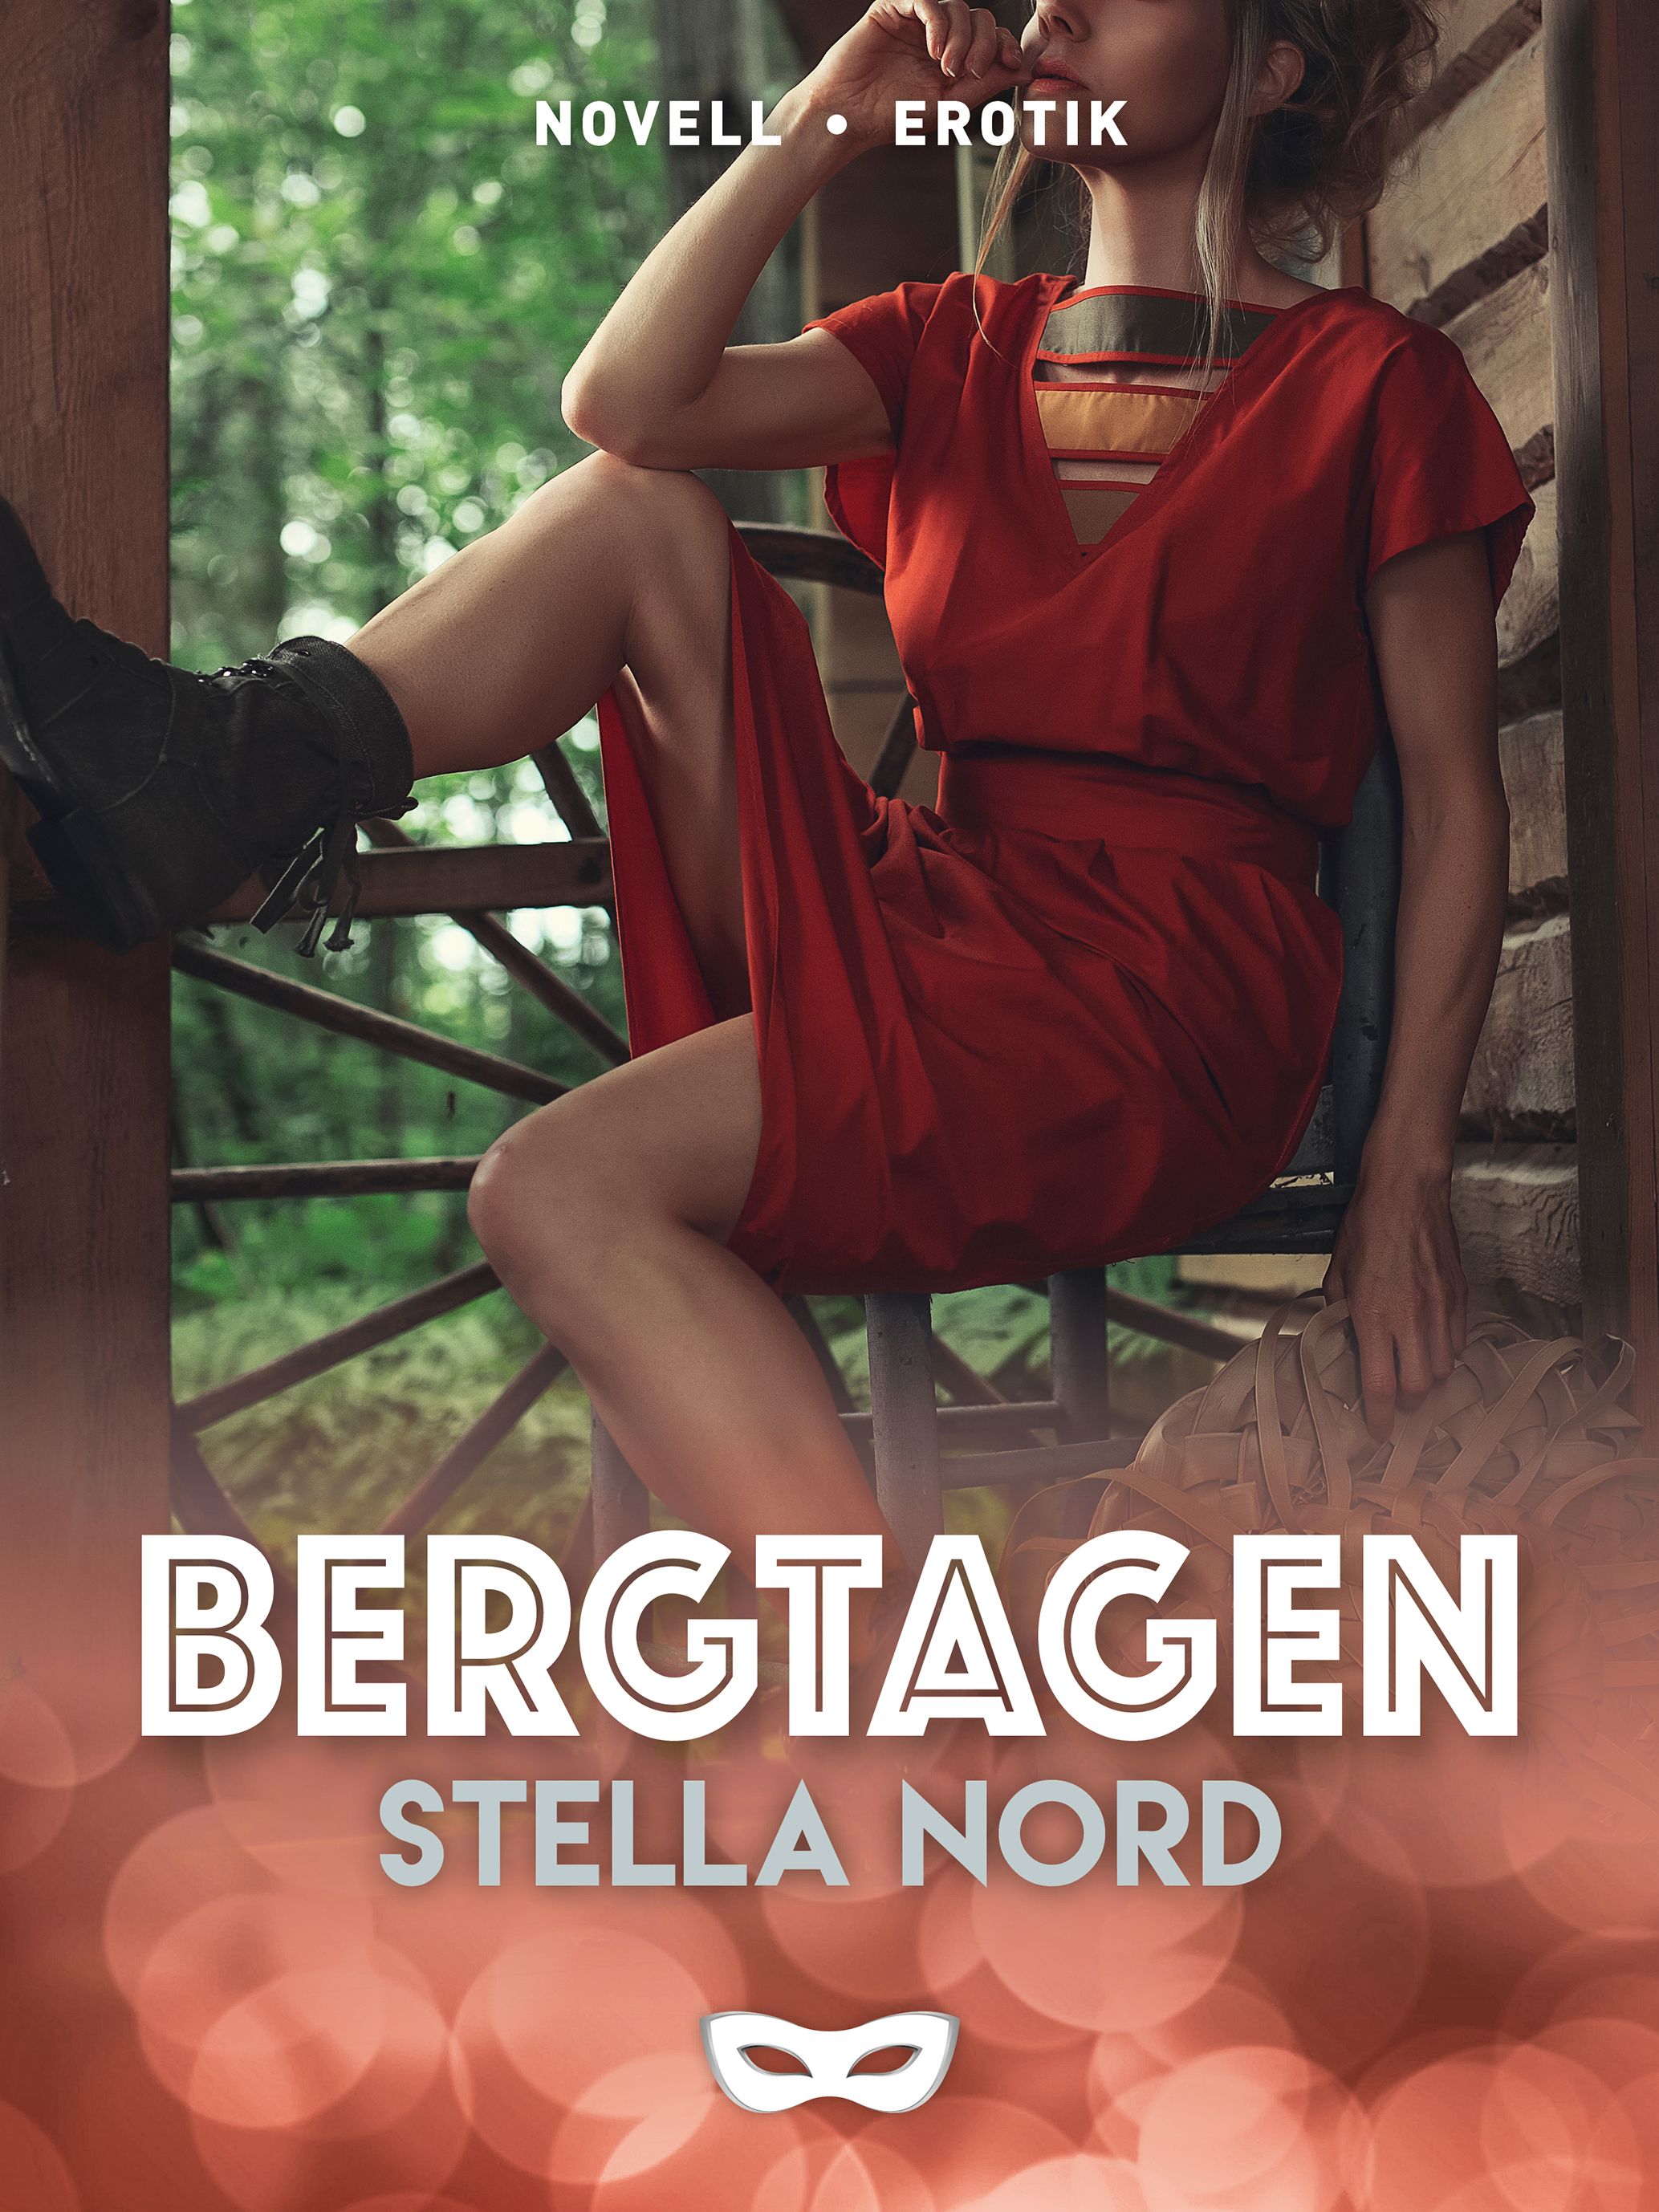 Bergtagen, eBook by Stella Nord